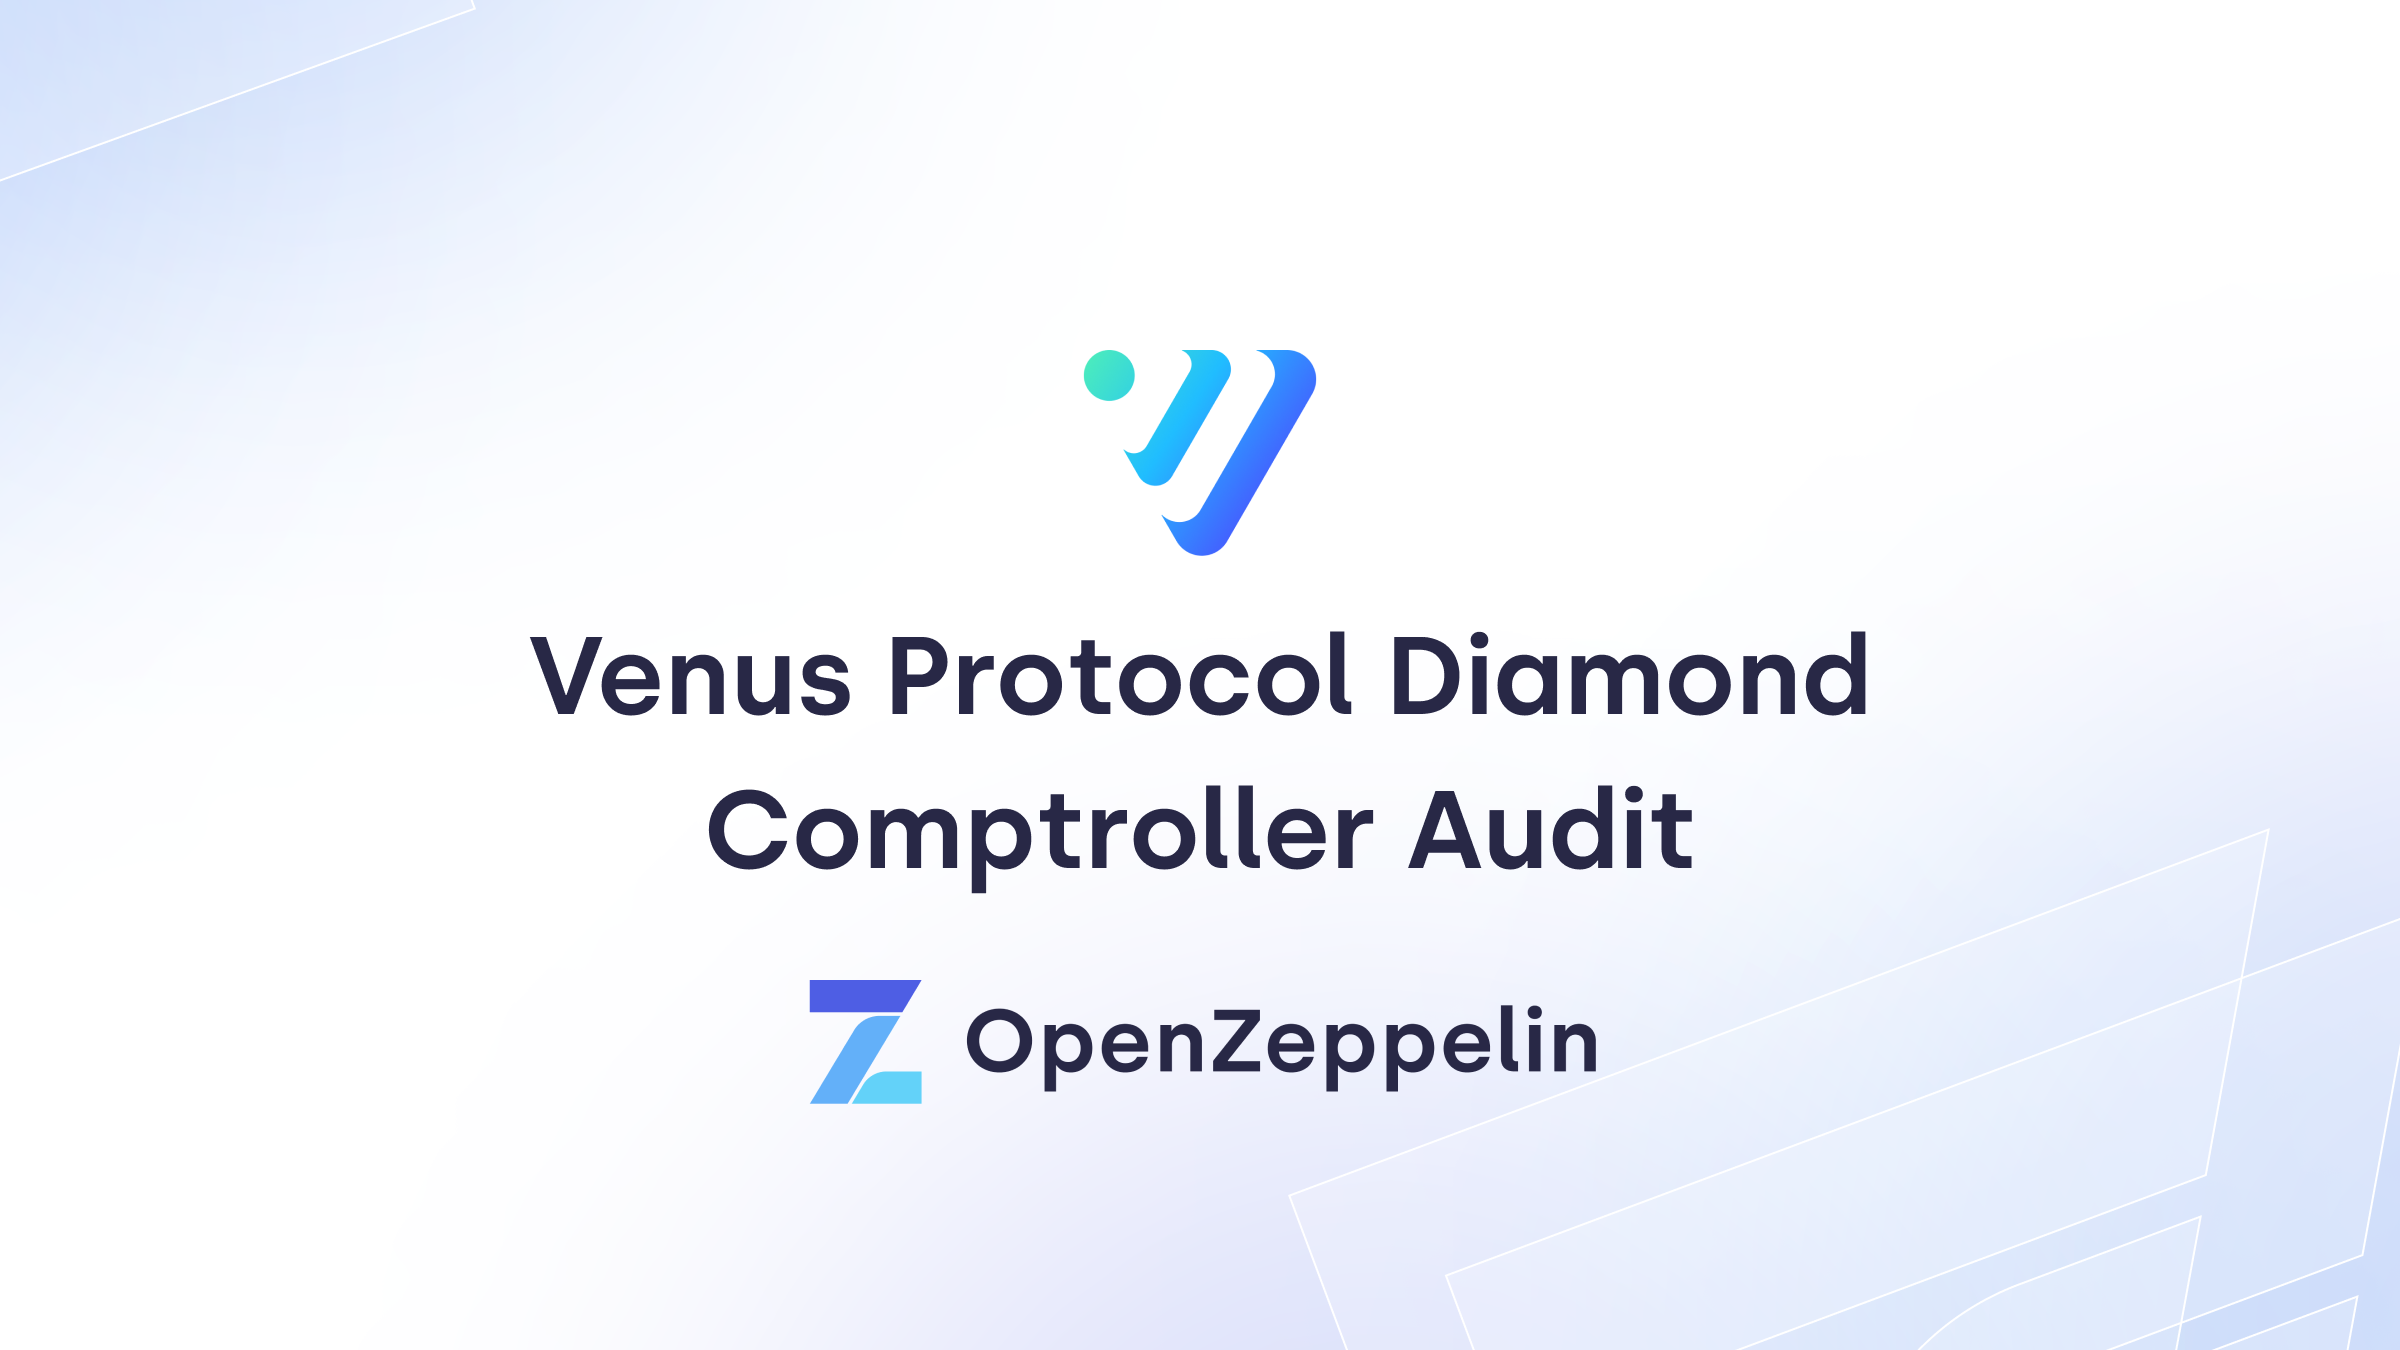 Venus Protocol Diamond Comptroller Audit Featured Image